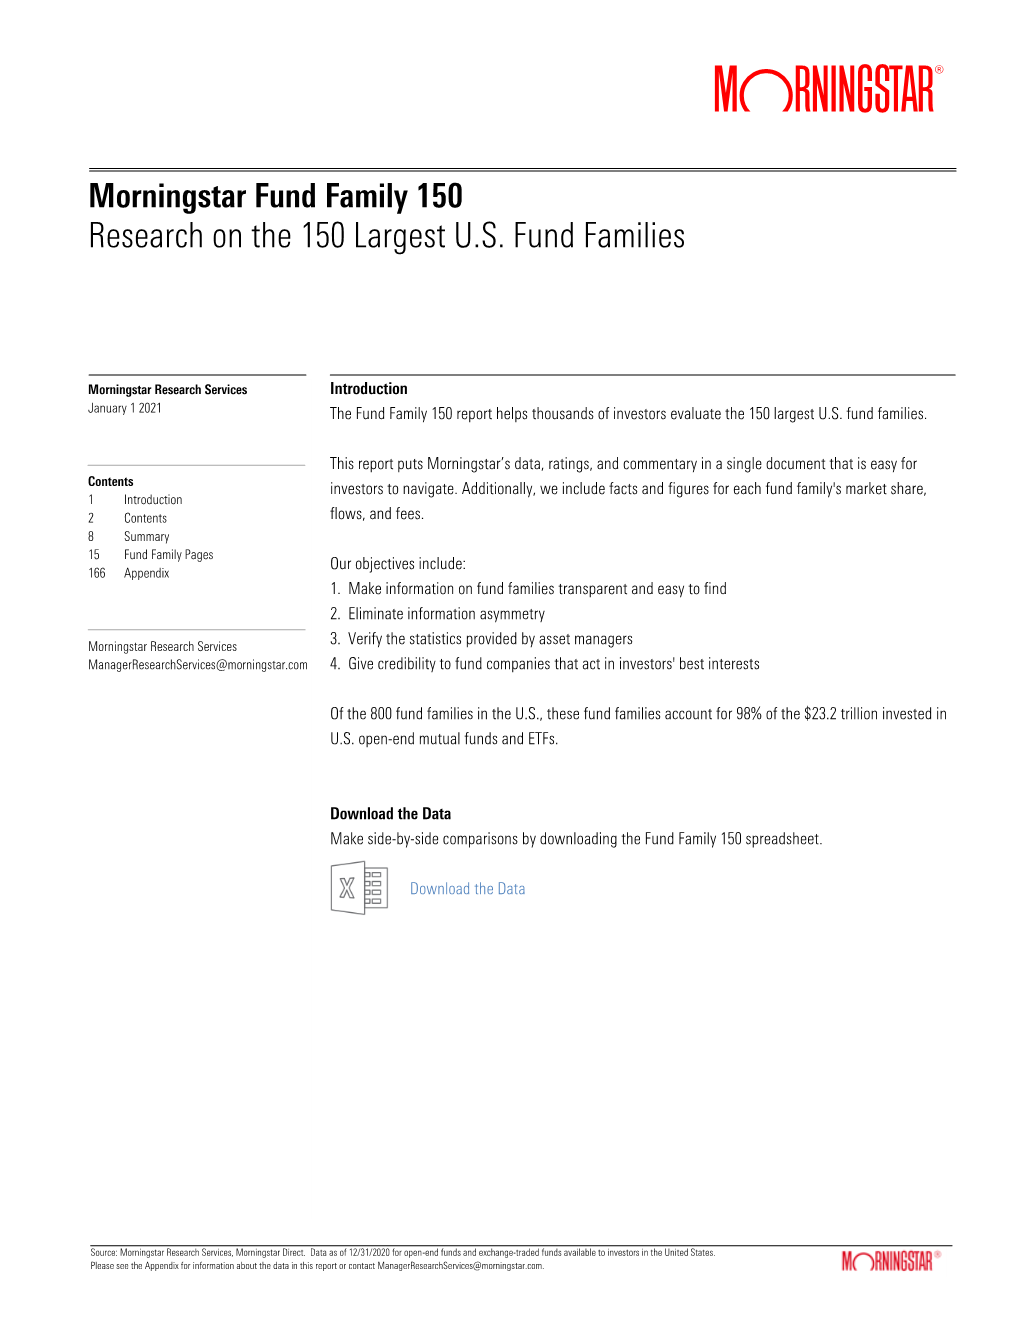 Morningstar Fund Family 150 Report Date: January 1, 2021